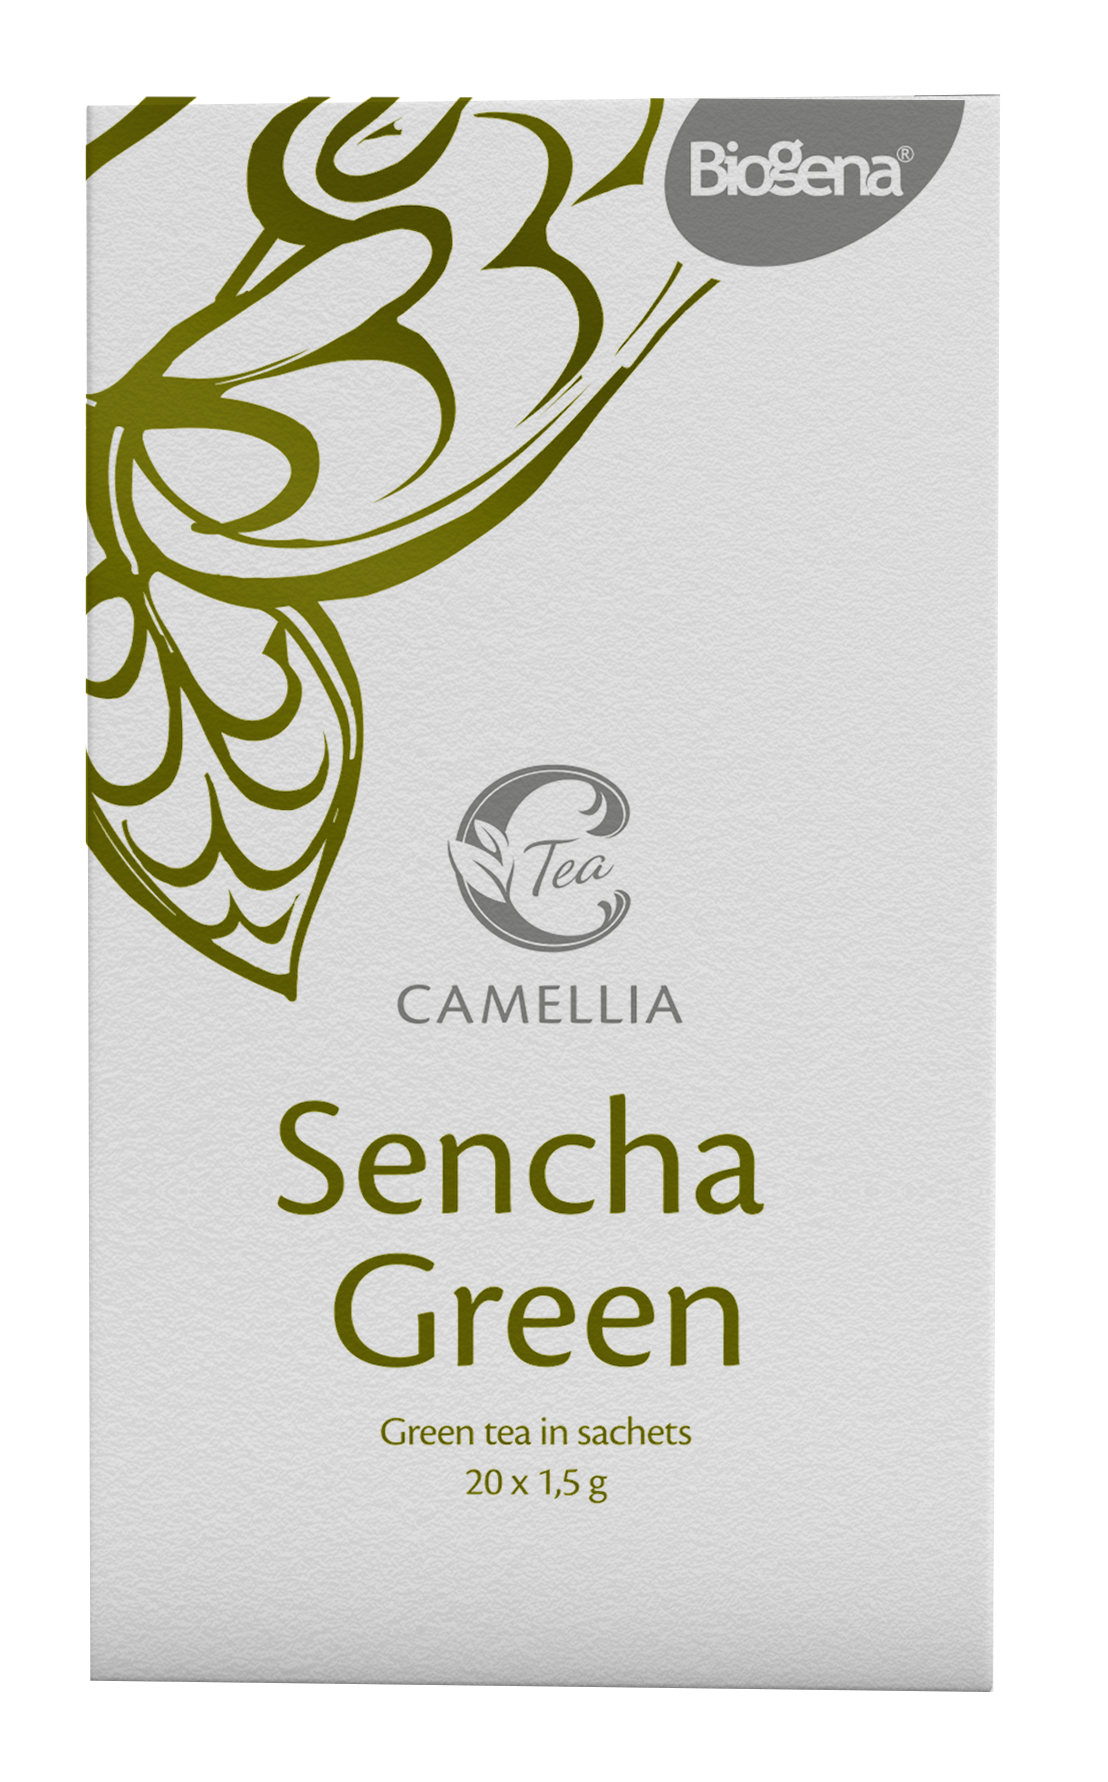 Sencha Green